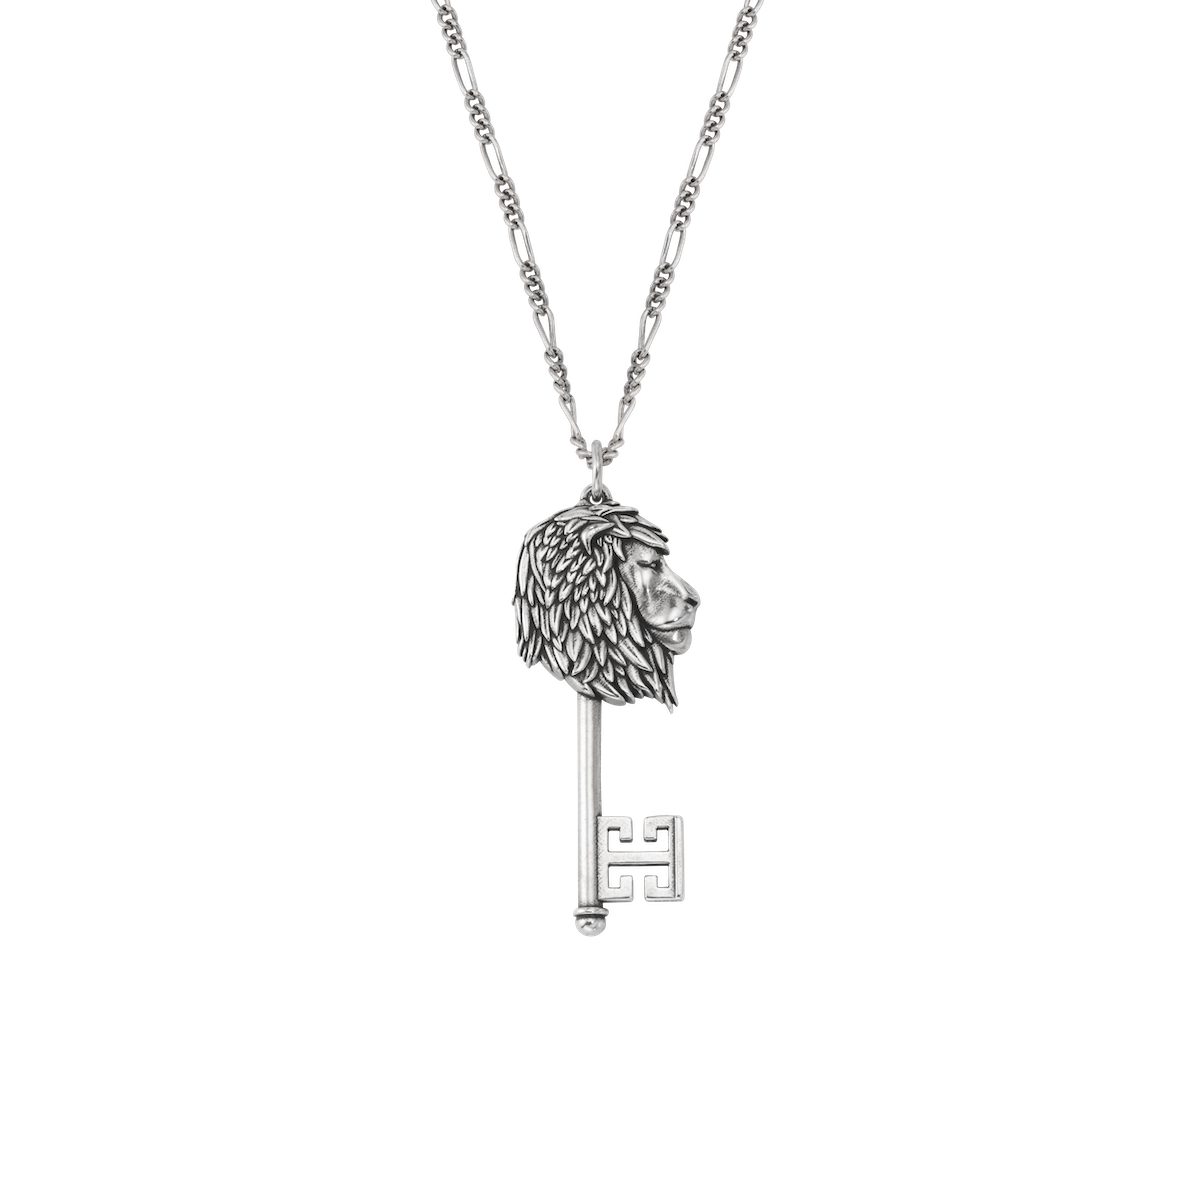 Lion Key Necklace